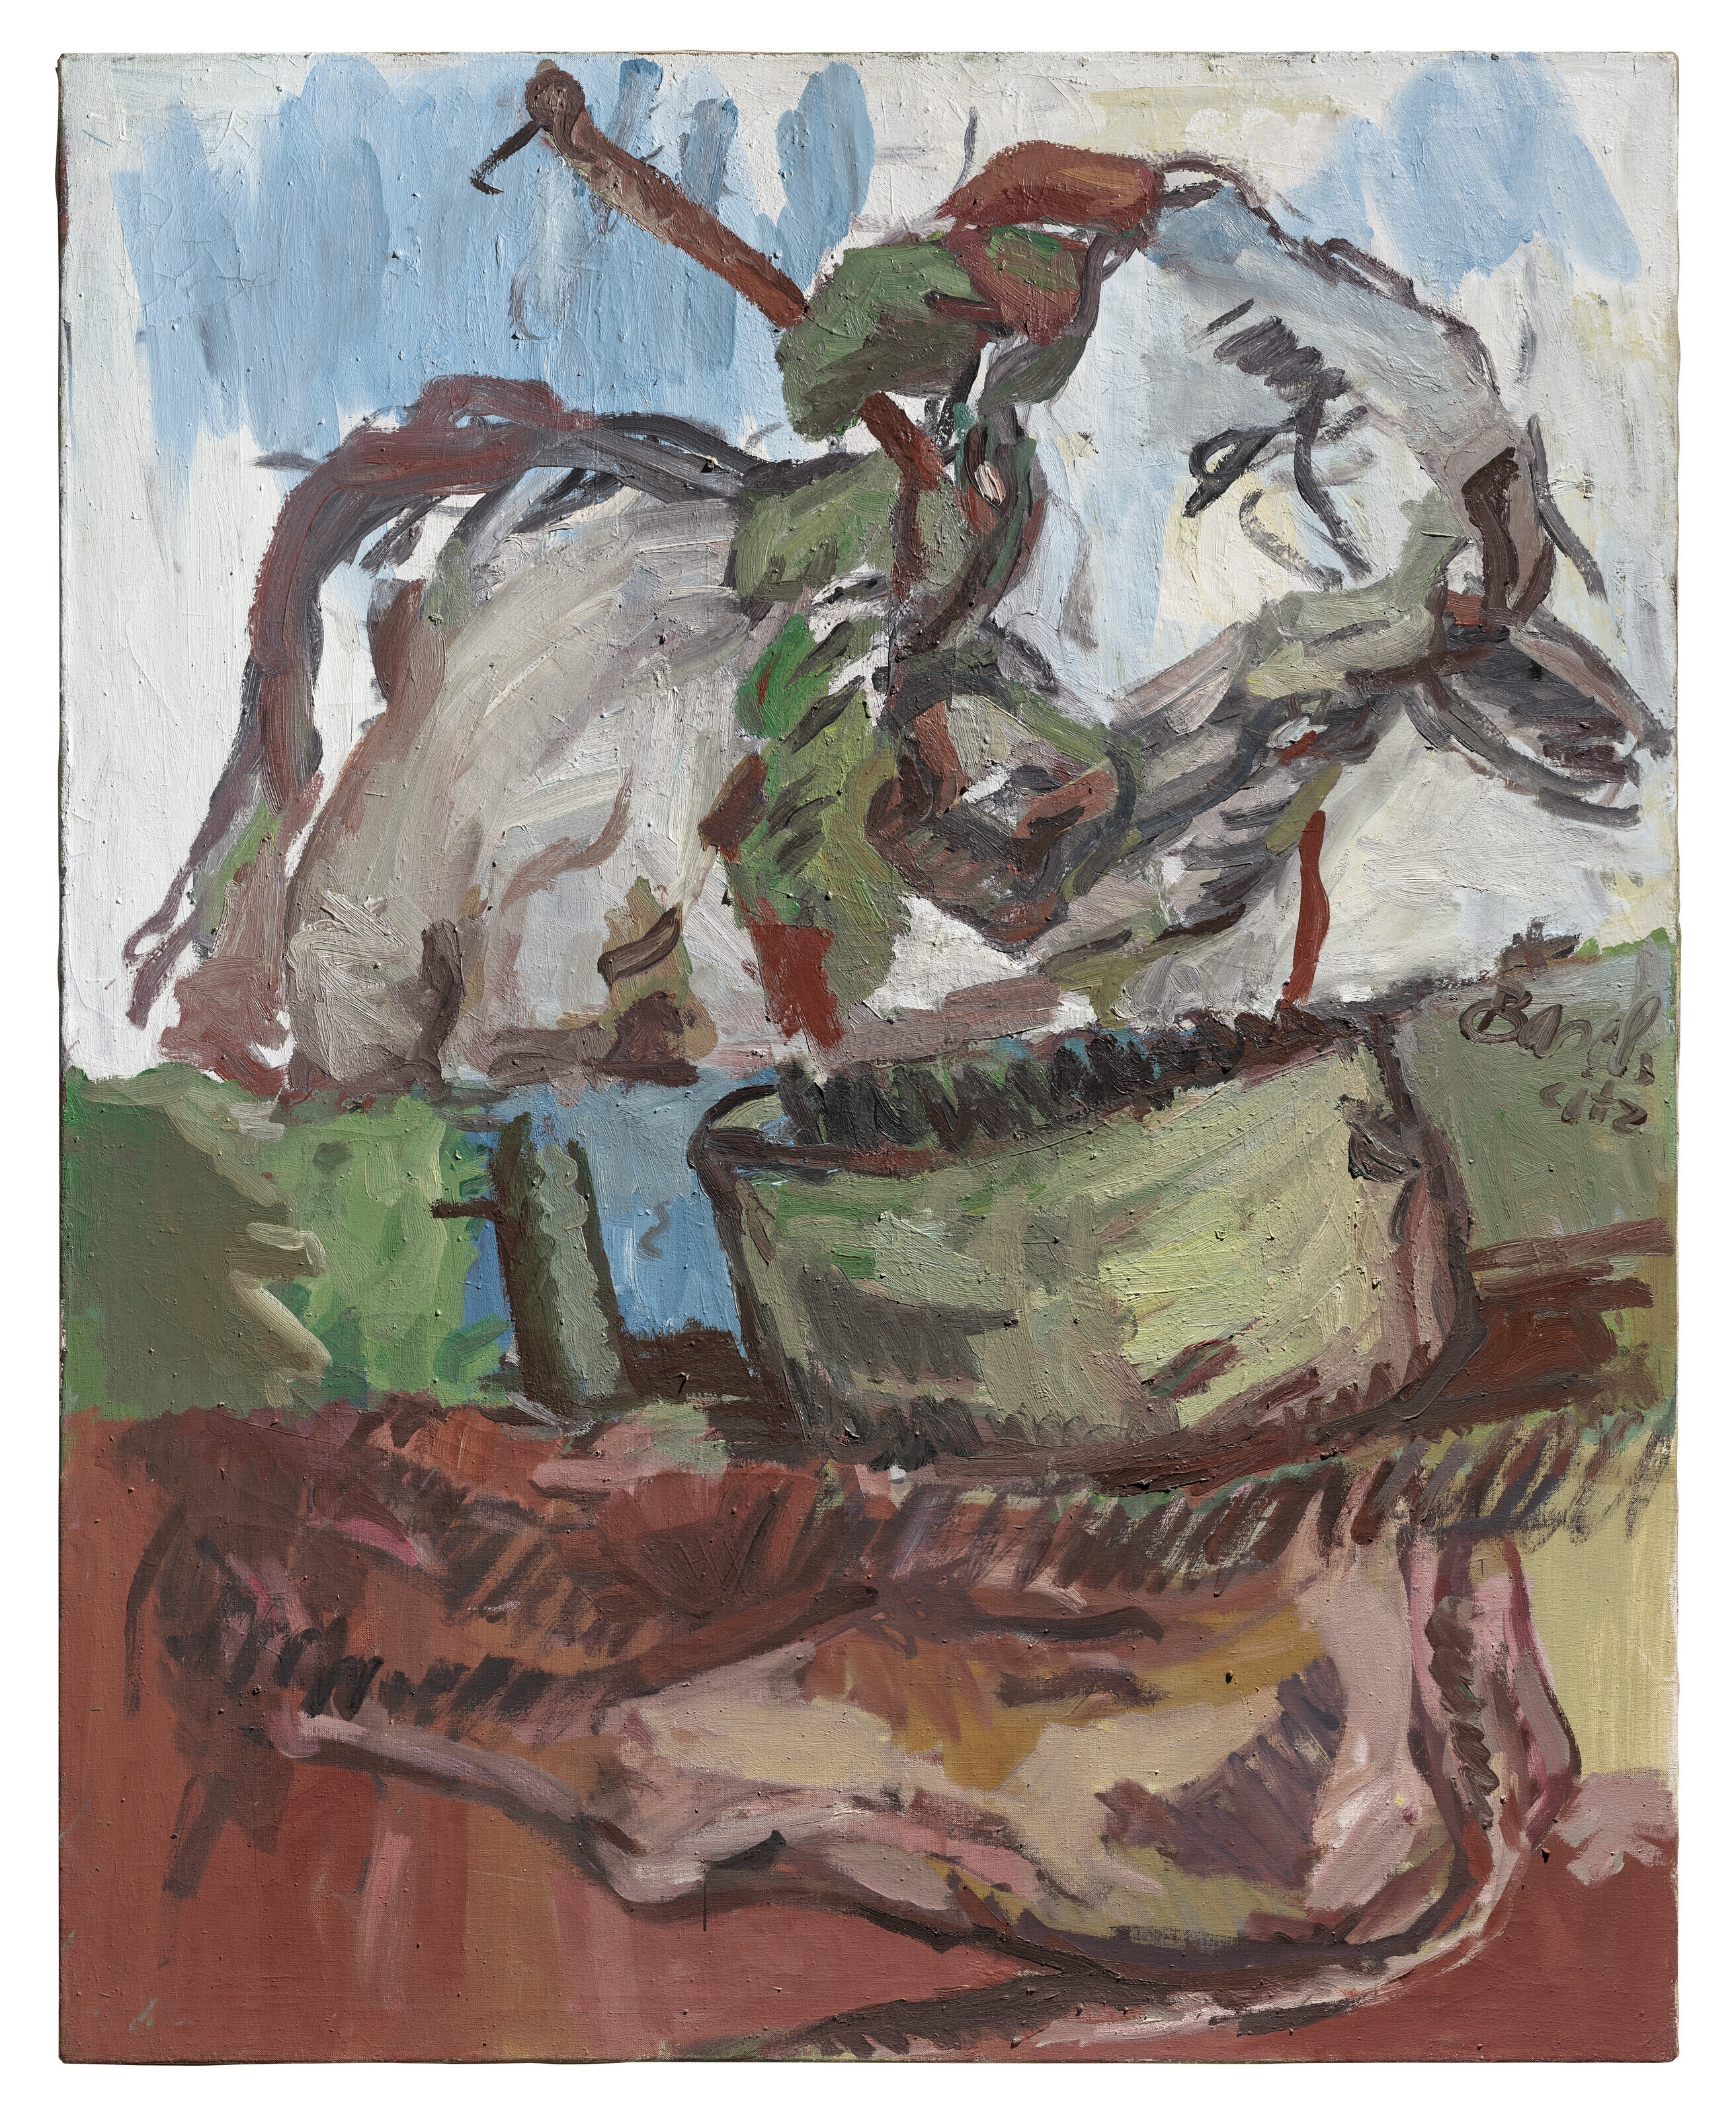 Drei Streifen – Die Kuh (Three stripes – The cow) by Georg Baselitz, 1968